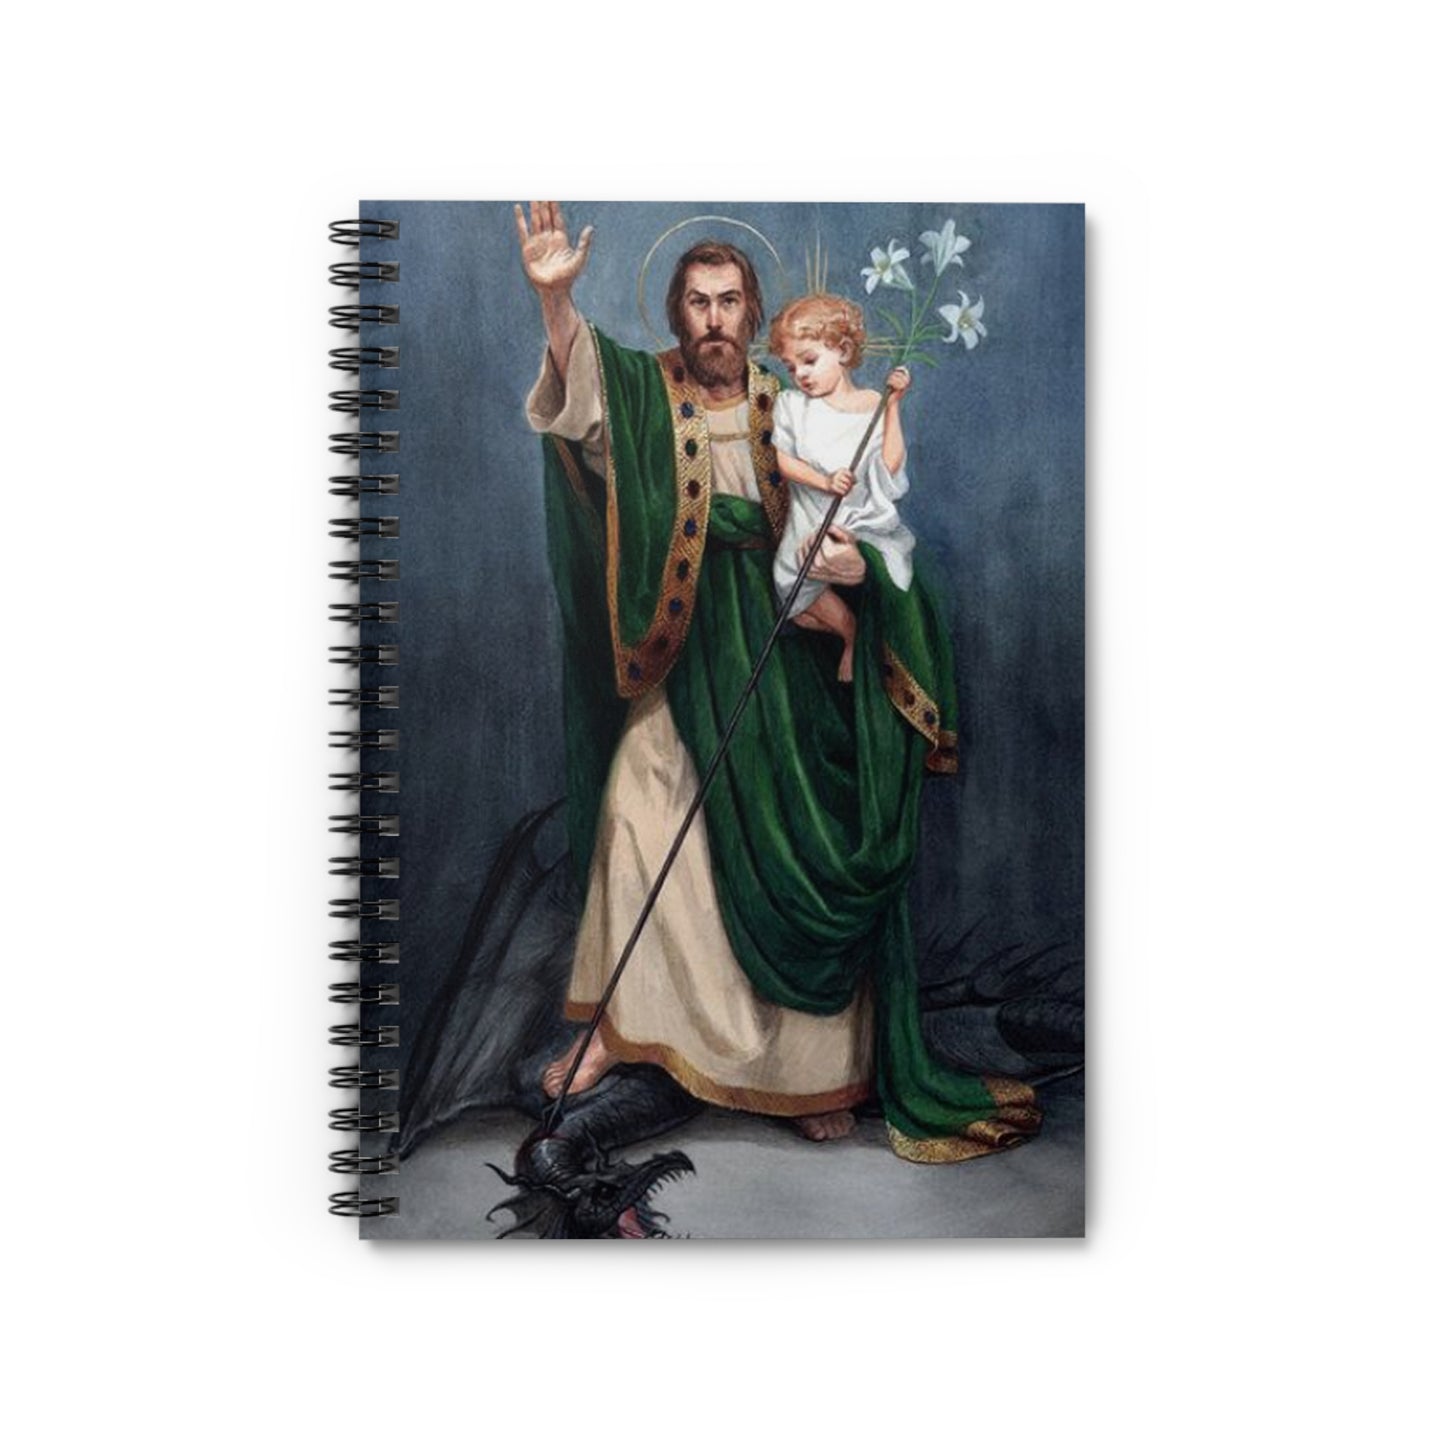 Saint Joseph Terror of Demons Catholic Notebook, Adoration Journal Christmas Gift, Religious Diary, St Joseph and the Child Jesus Art Gift